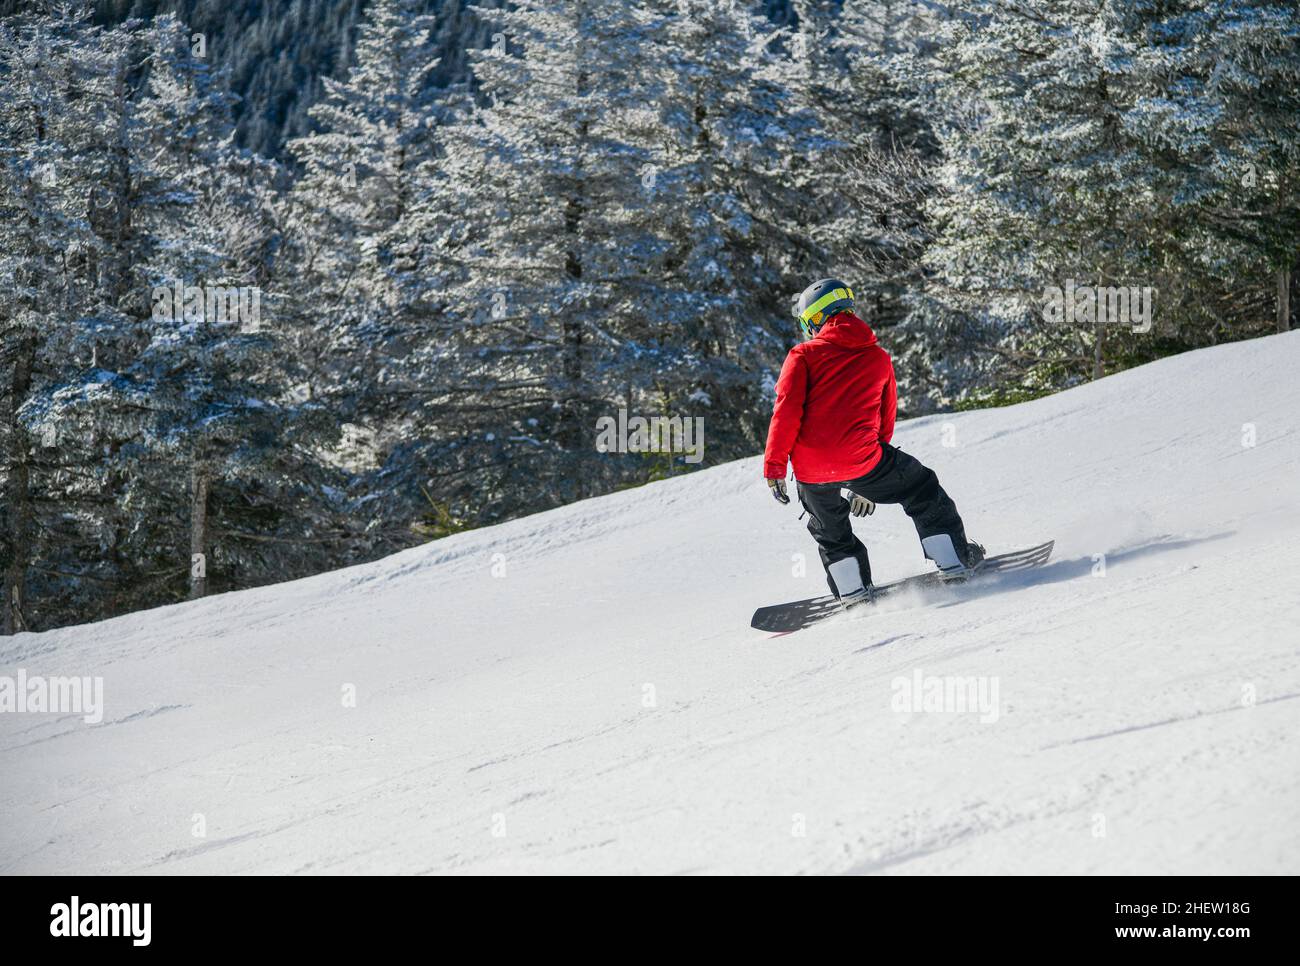 Freeride ski and snowboard tracks in powder snow Stock Photo by salajean